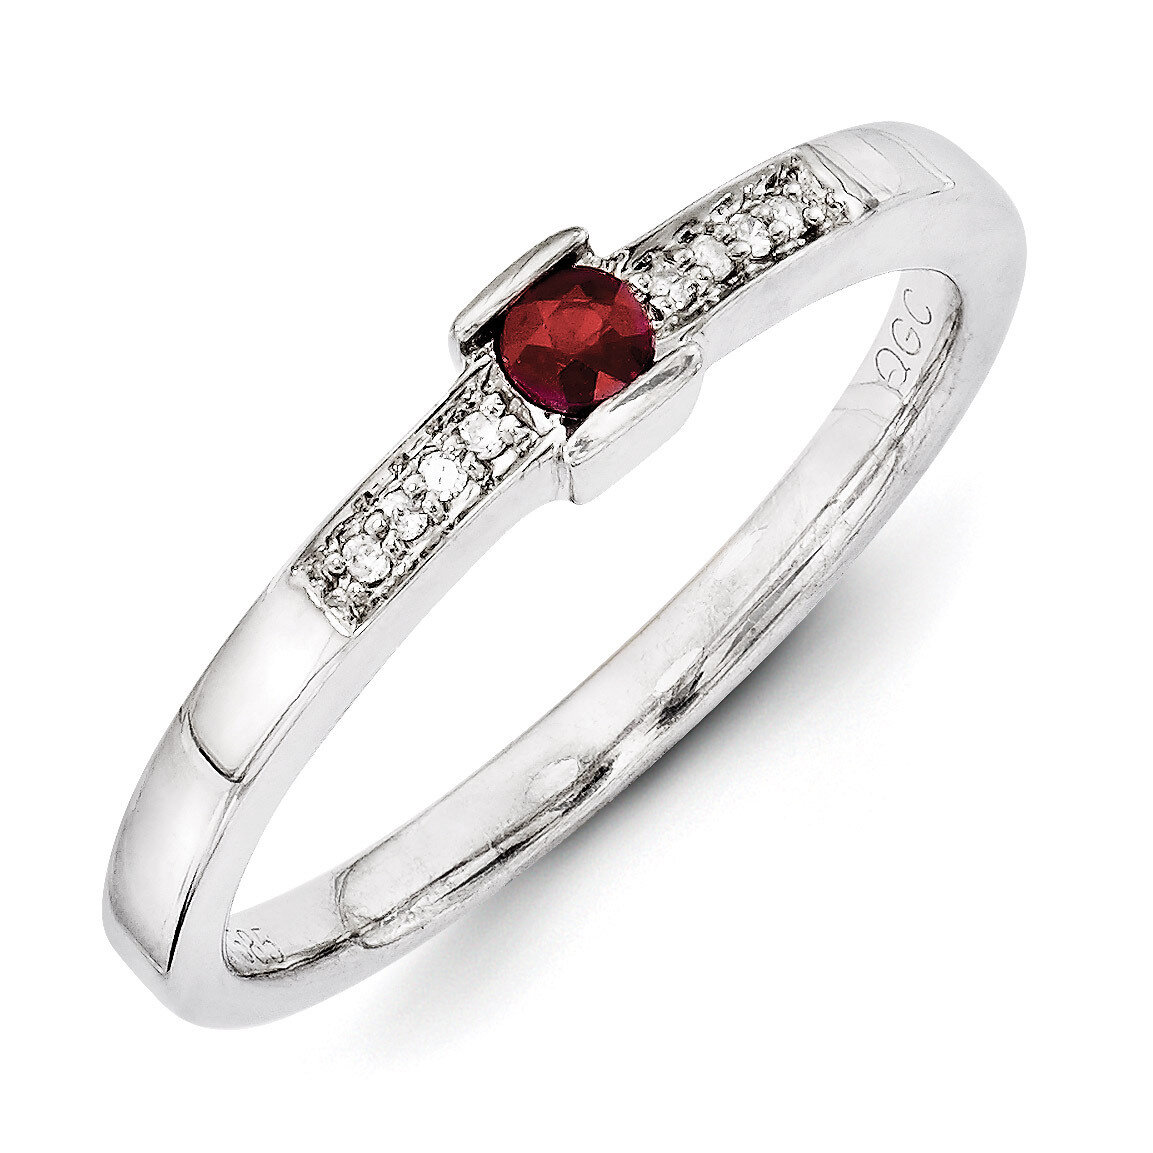 1 Birthstone Family Jewelry Diamond Semi-Set Ring 14k White Gold XMRW42/1